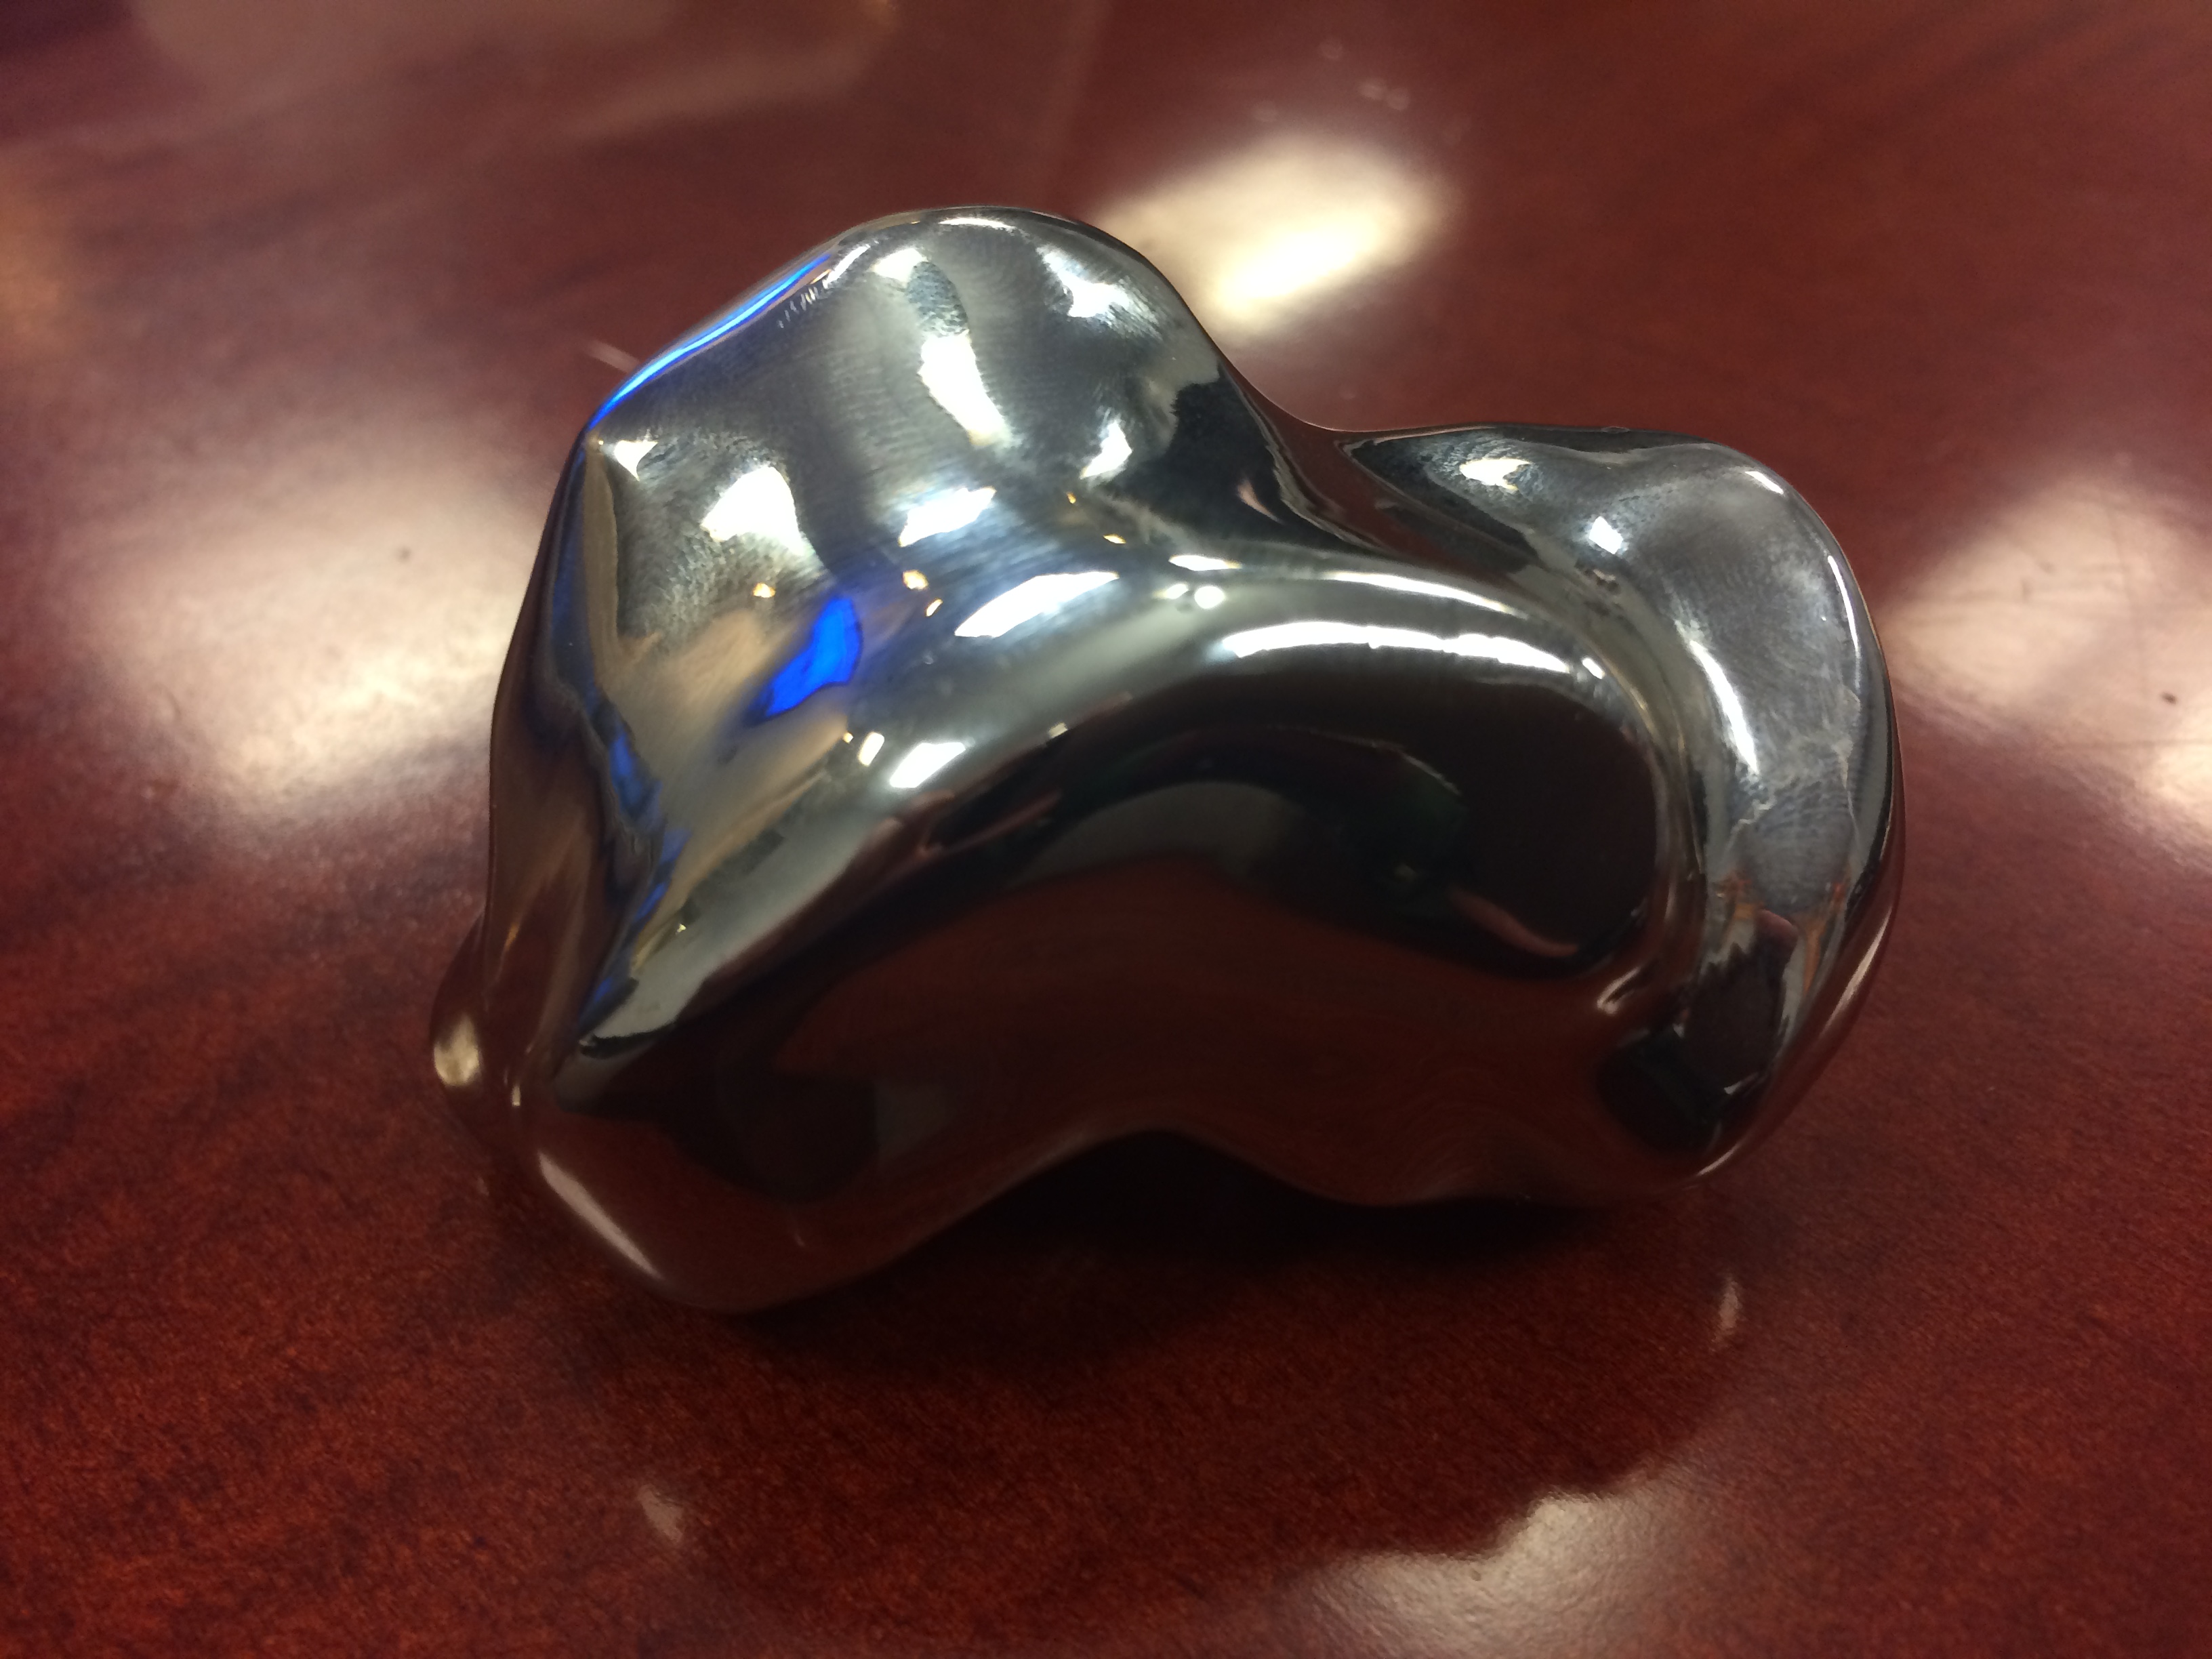 Chrome/cobalt talus replacement prosthesis